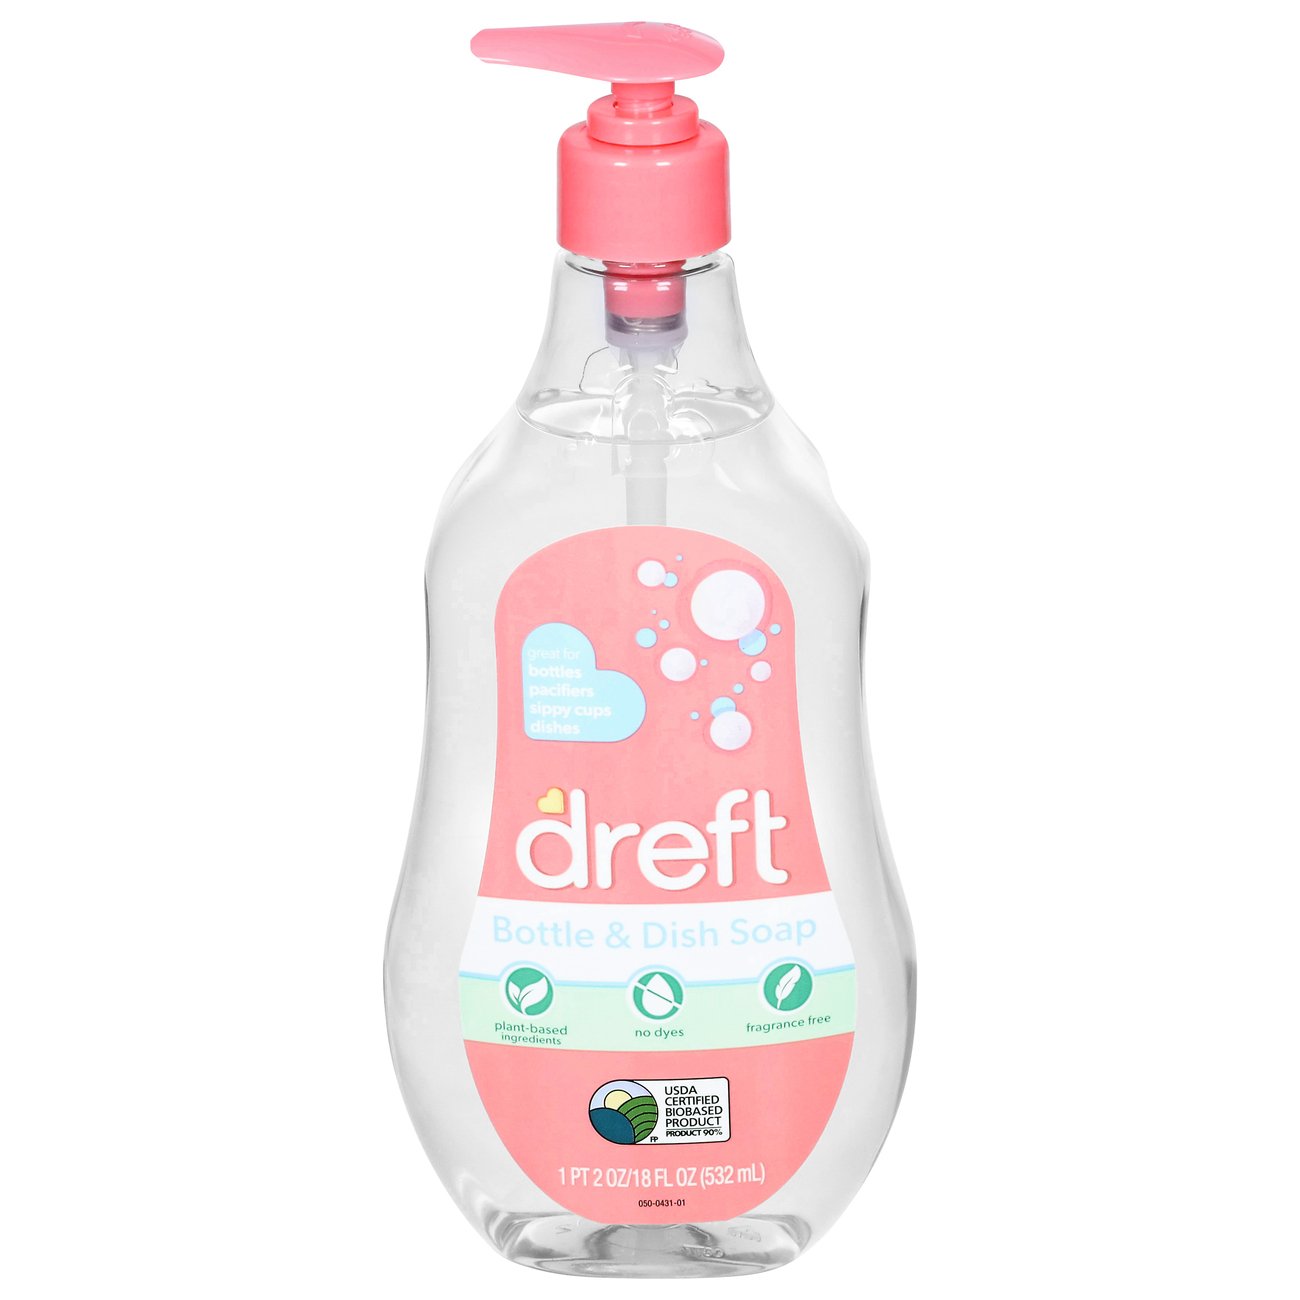 Dreft Bottle & Dish Soap Fragrance Free